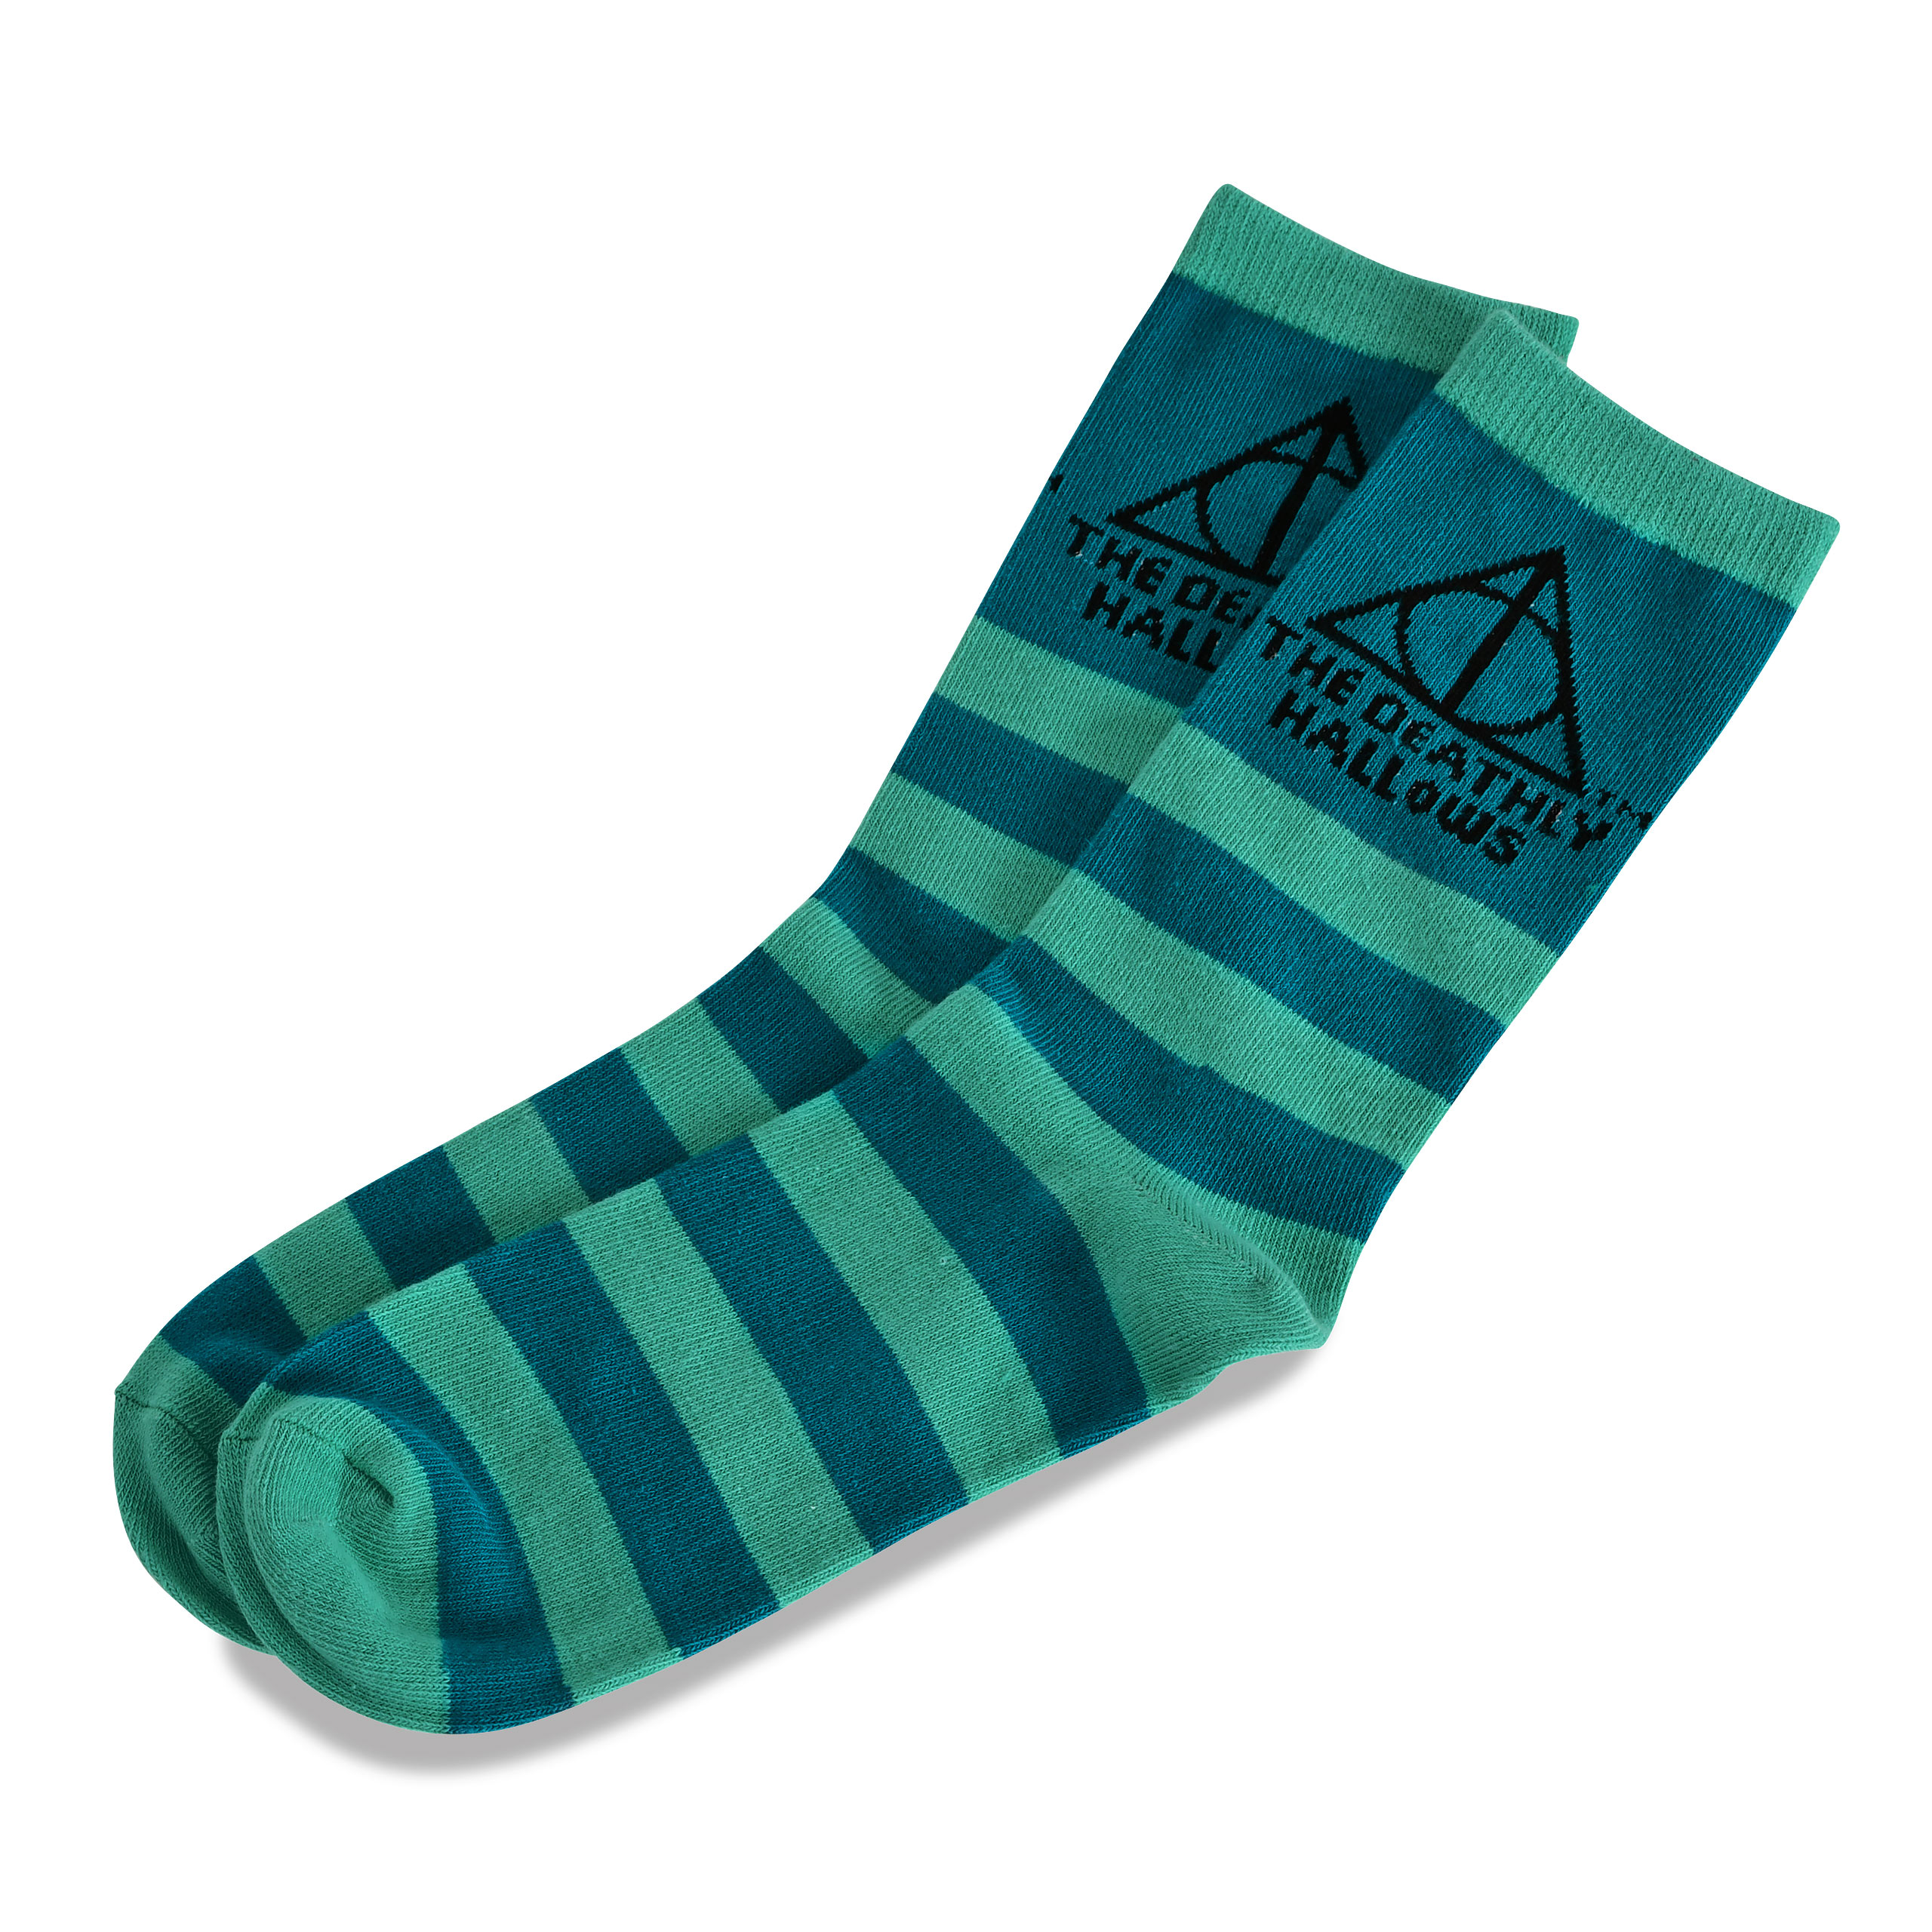 Harry Potter - Deathly Hallows Socks blue-green